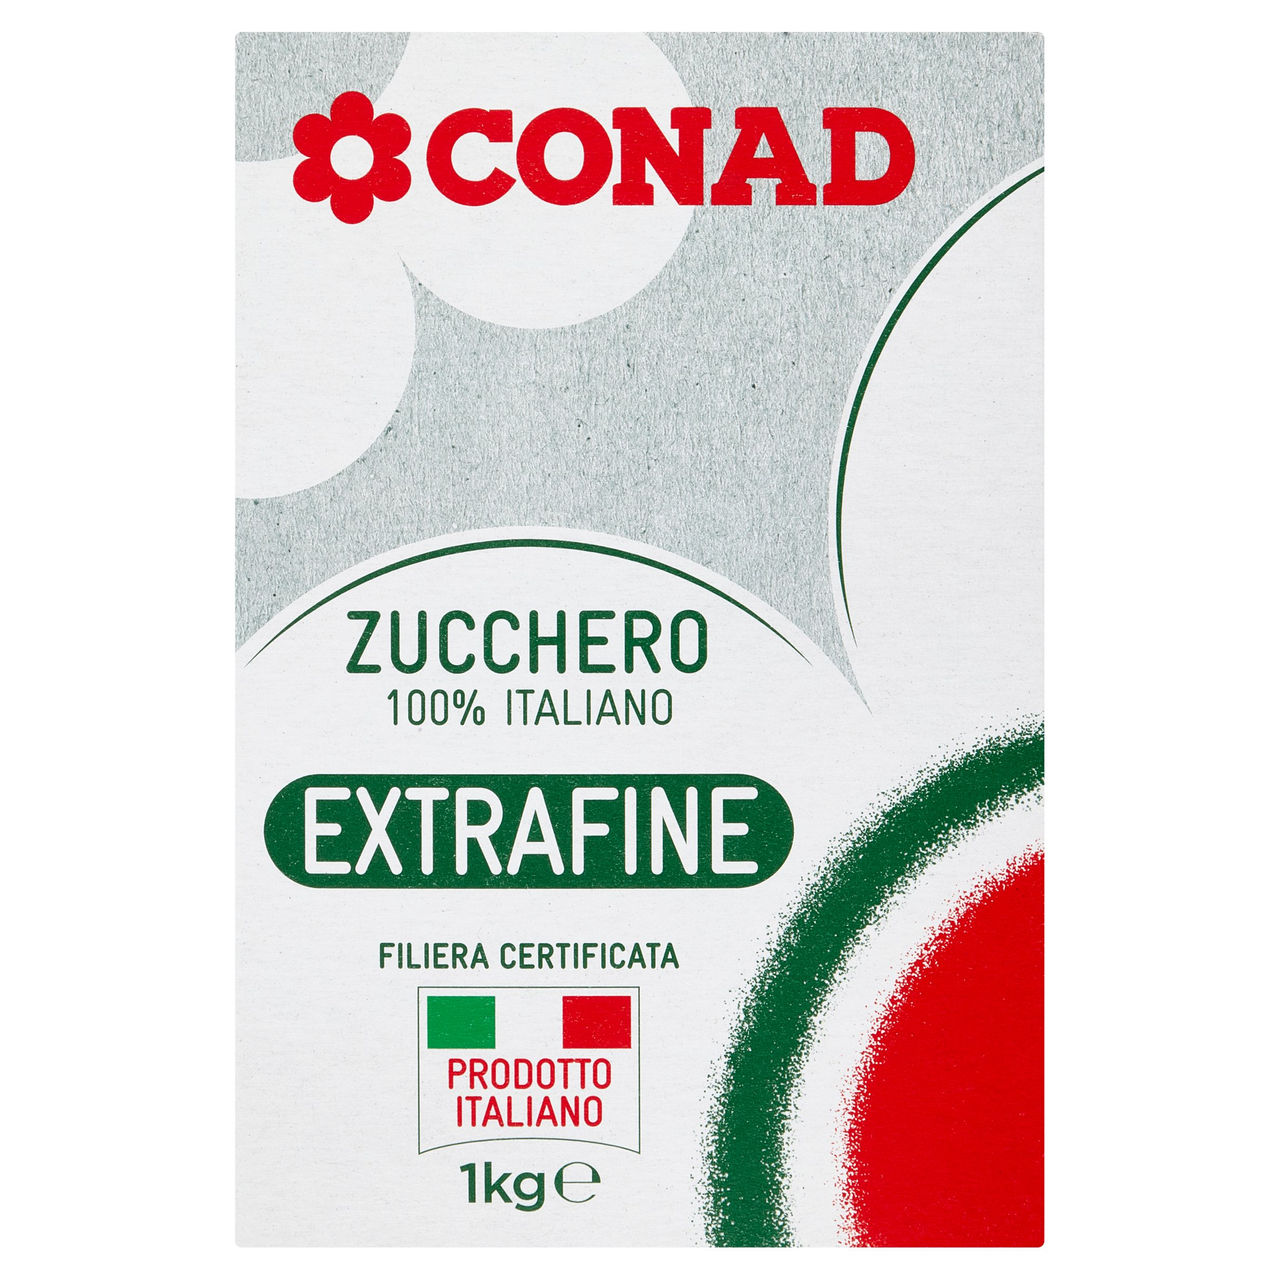 CONAD Zucchero 100% Italiano Extrafine 1 kg